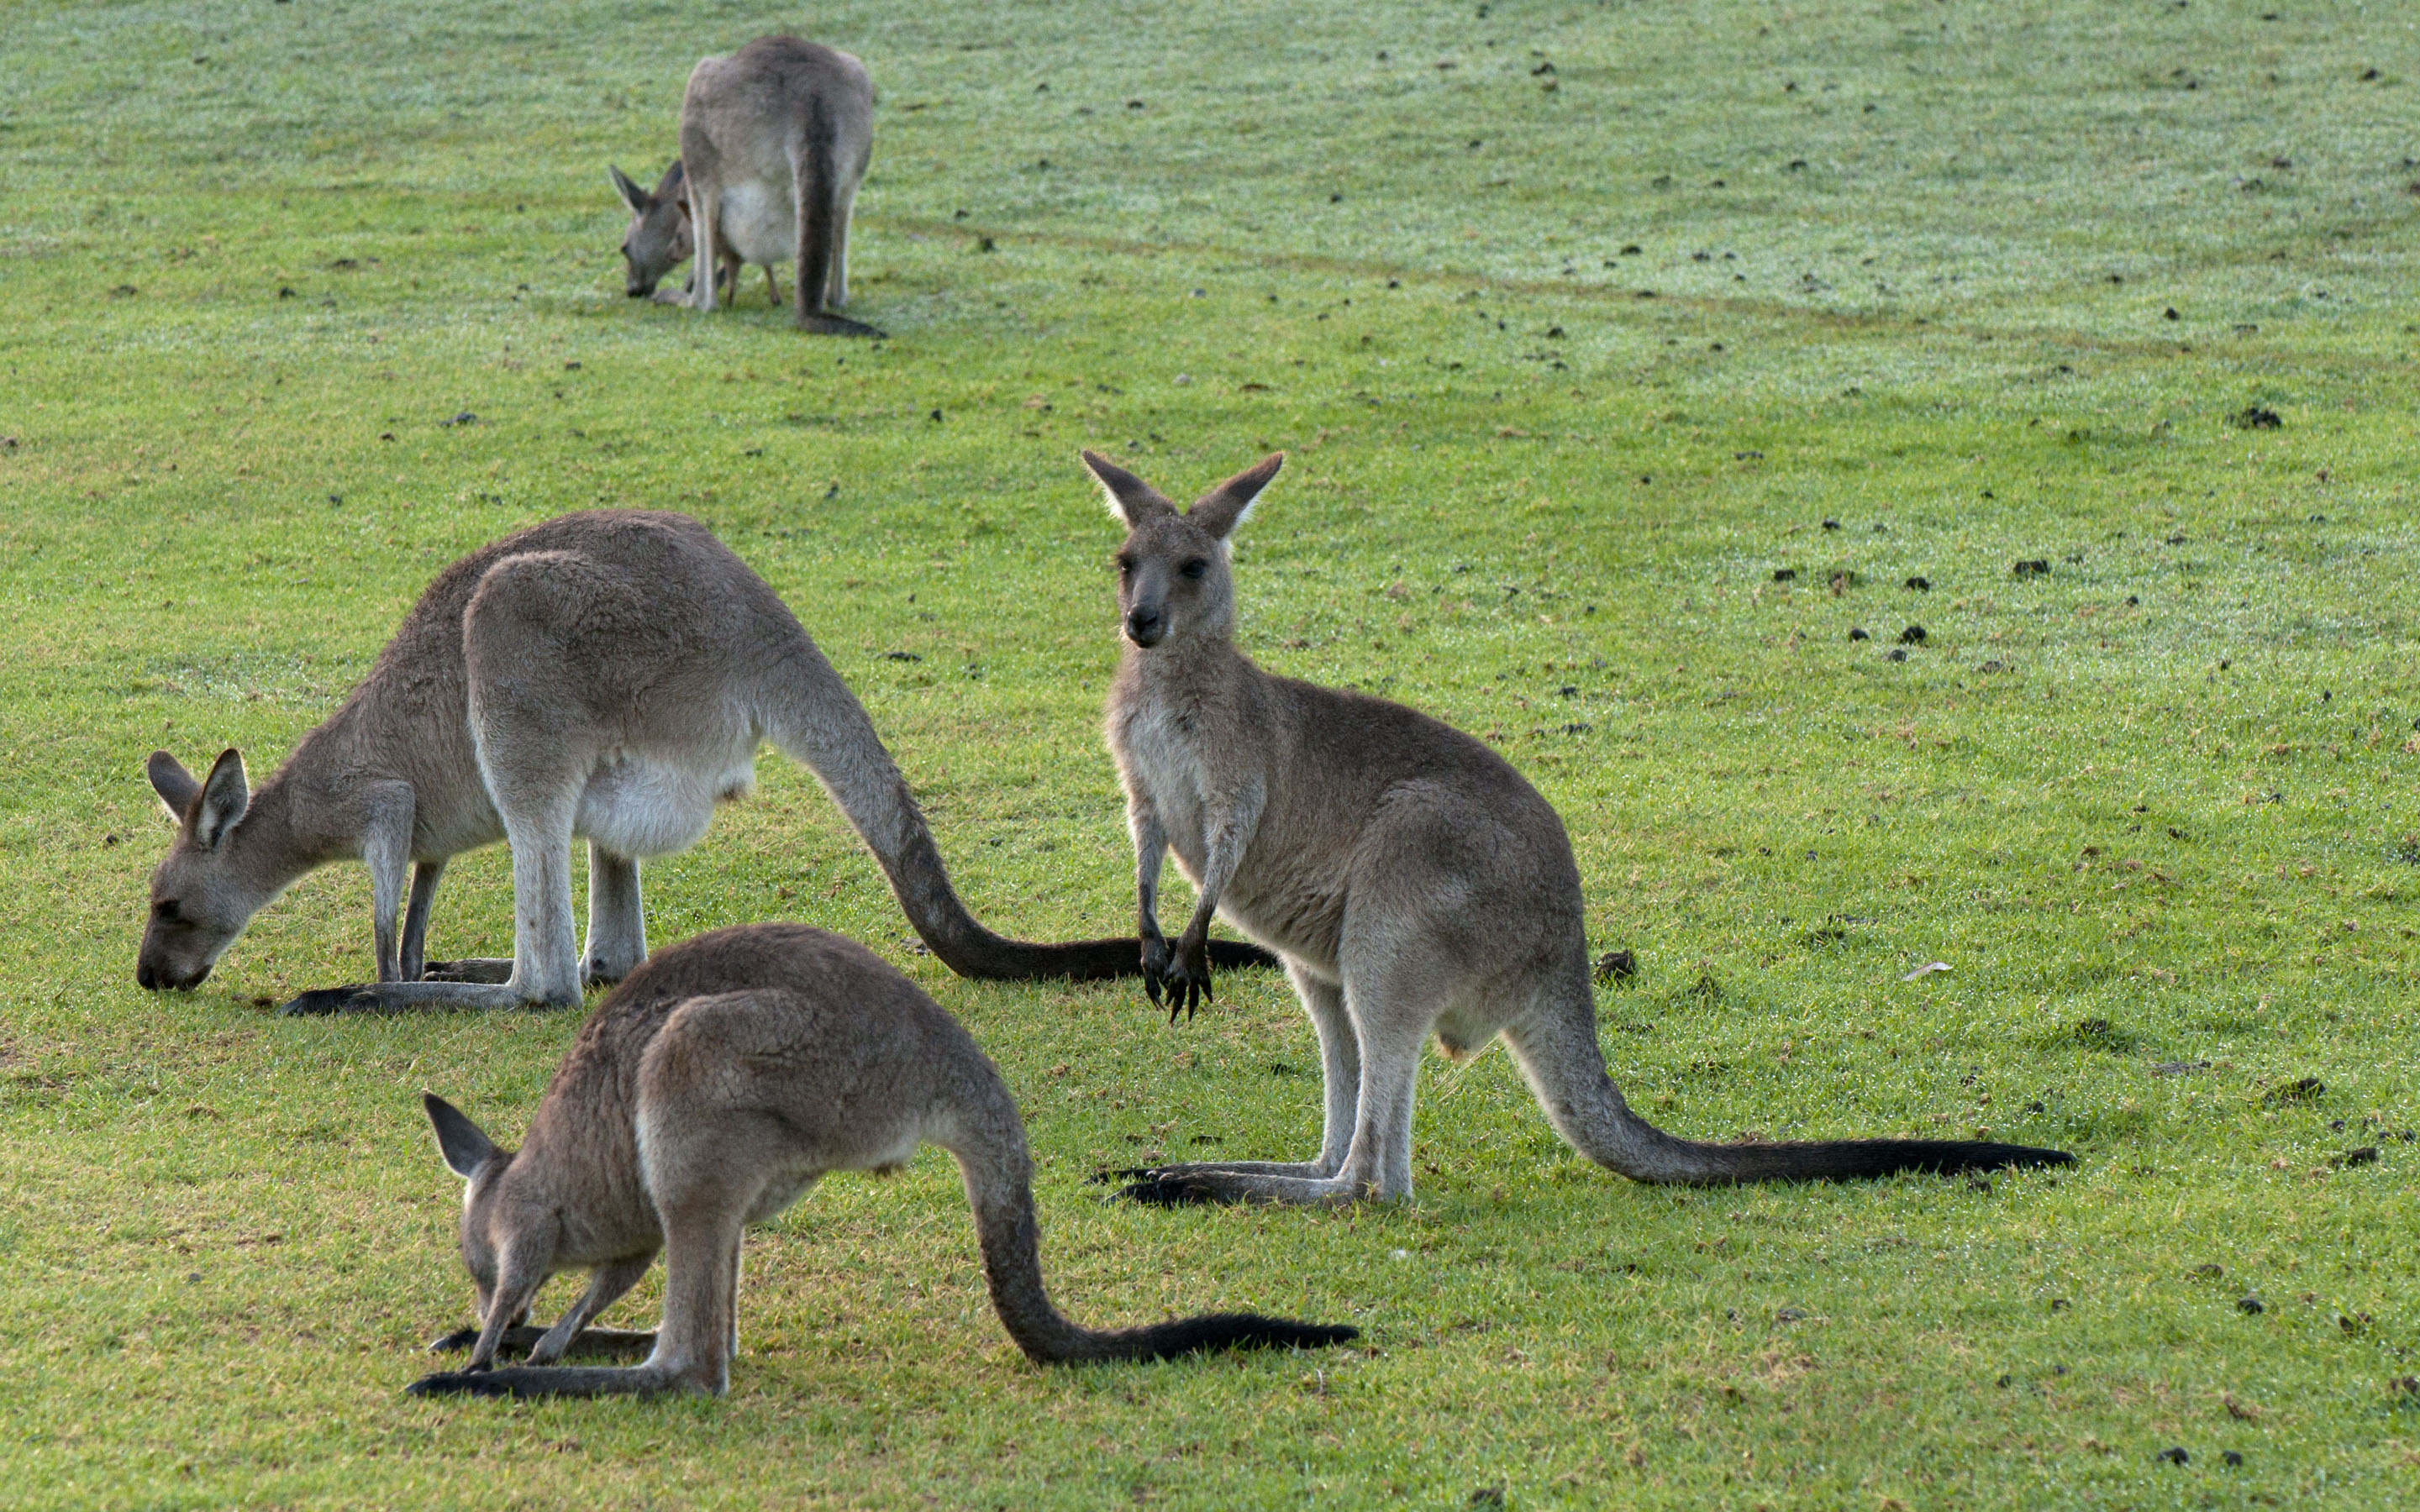 Kangaroo HD Wallpaper and Background Image